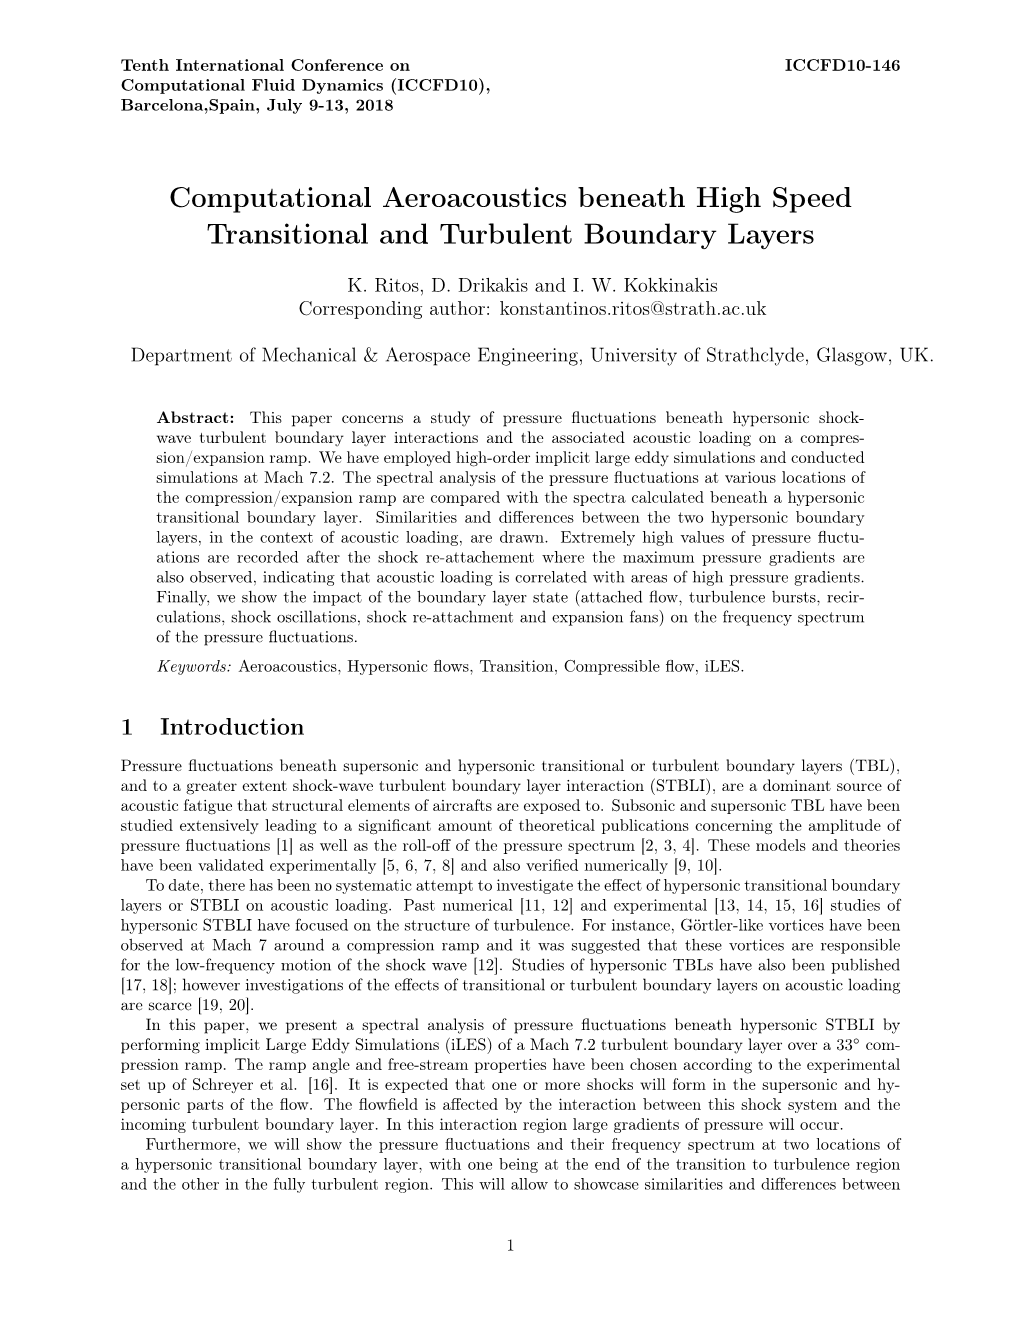 Computational Aeroacoustics Beneath High Speed Transitional and Turbulent Boundary Layers